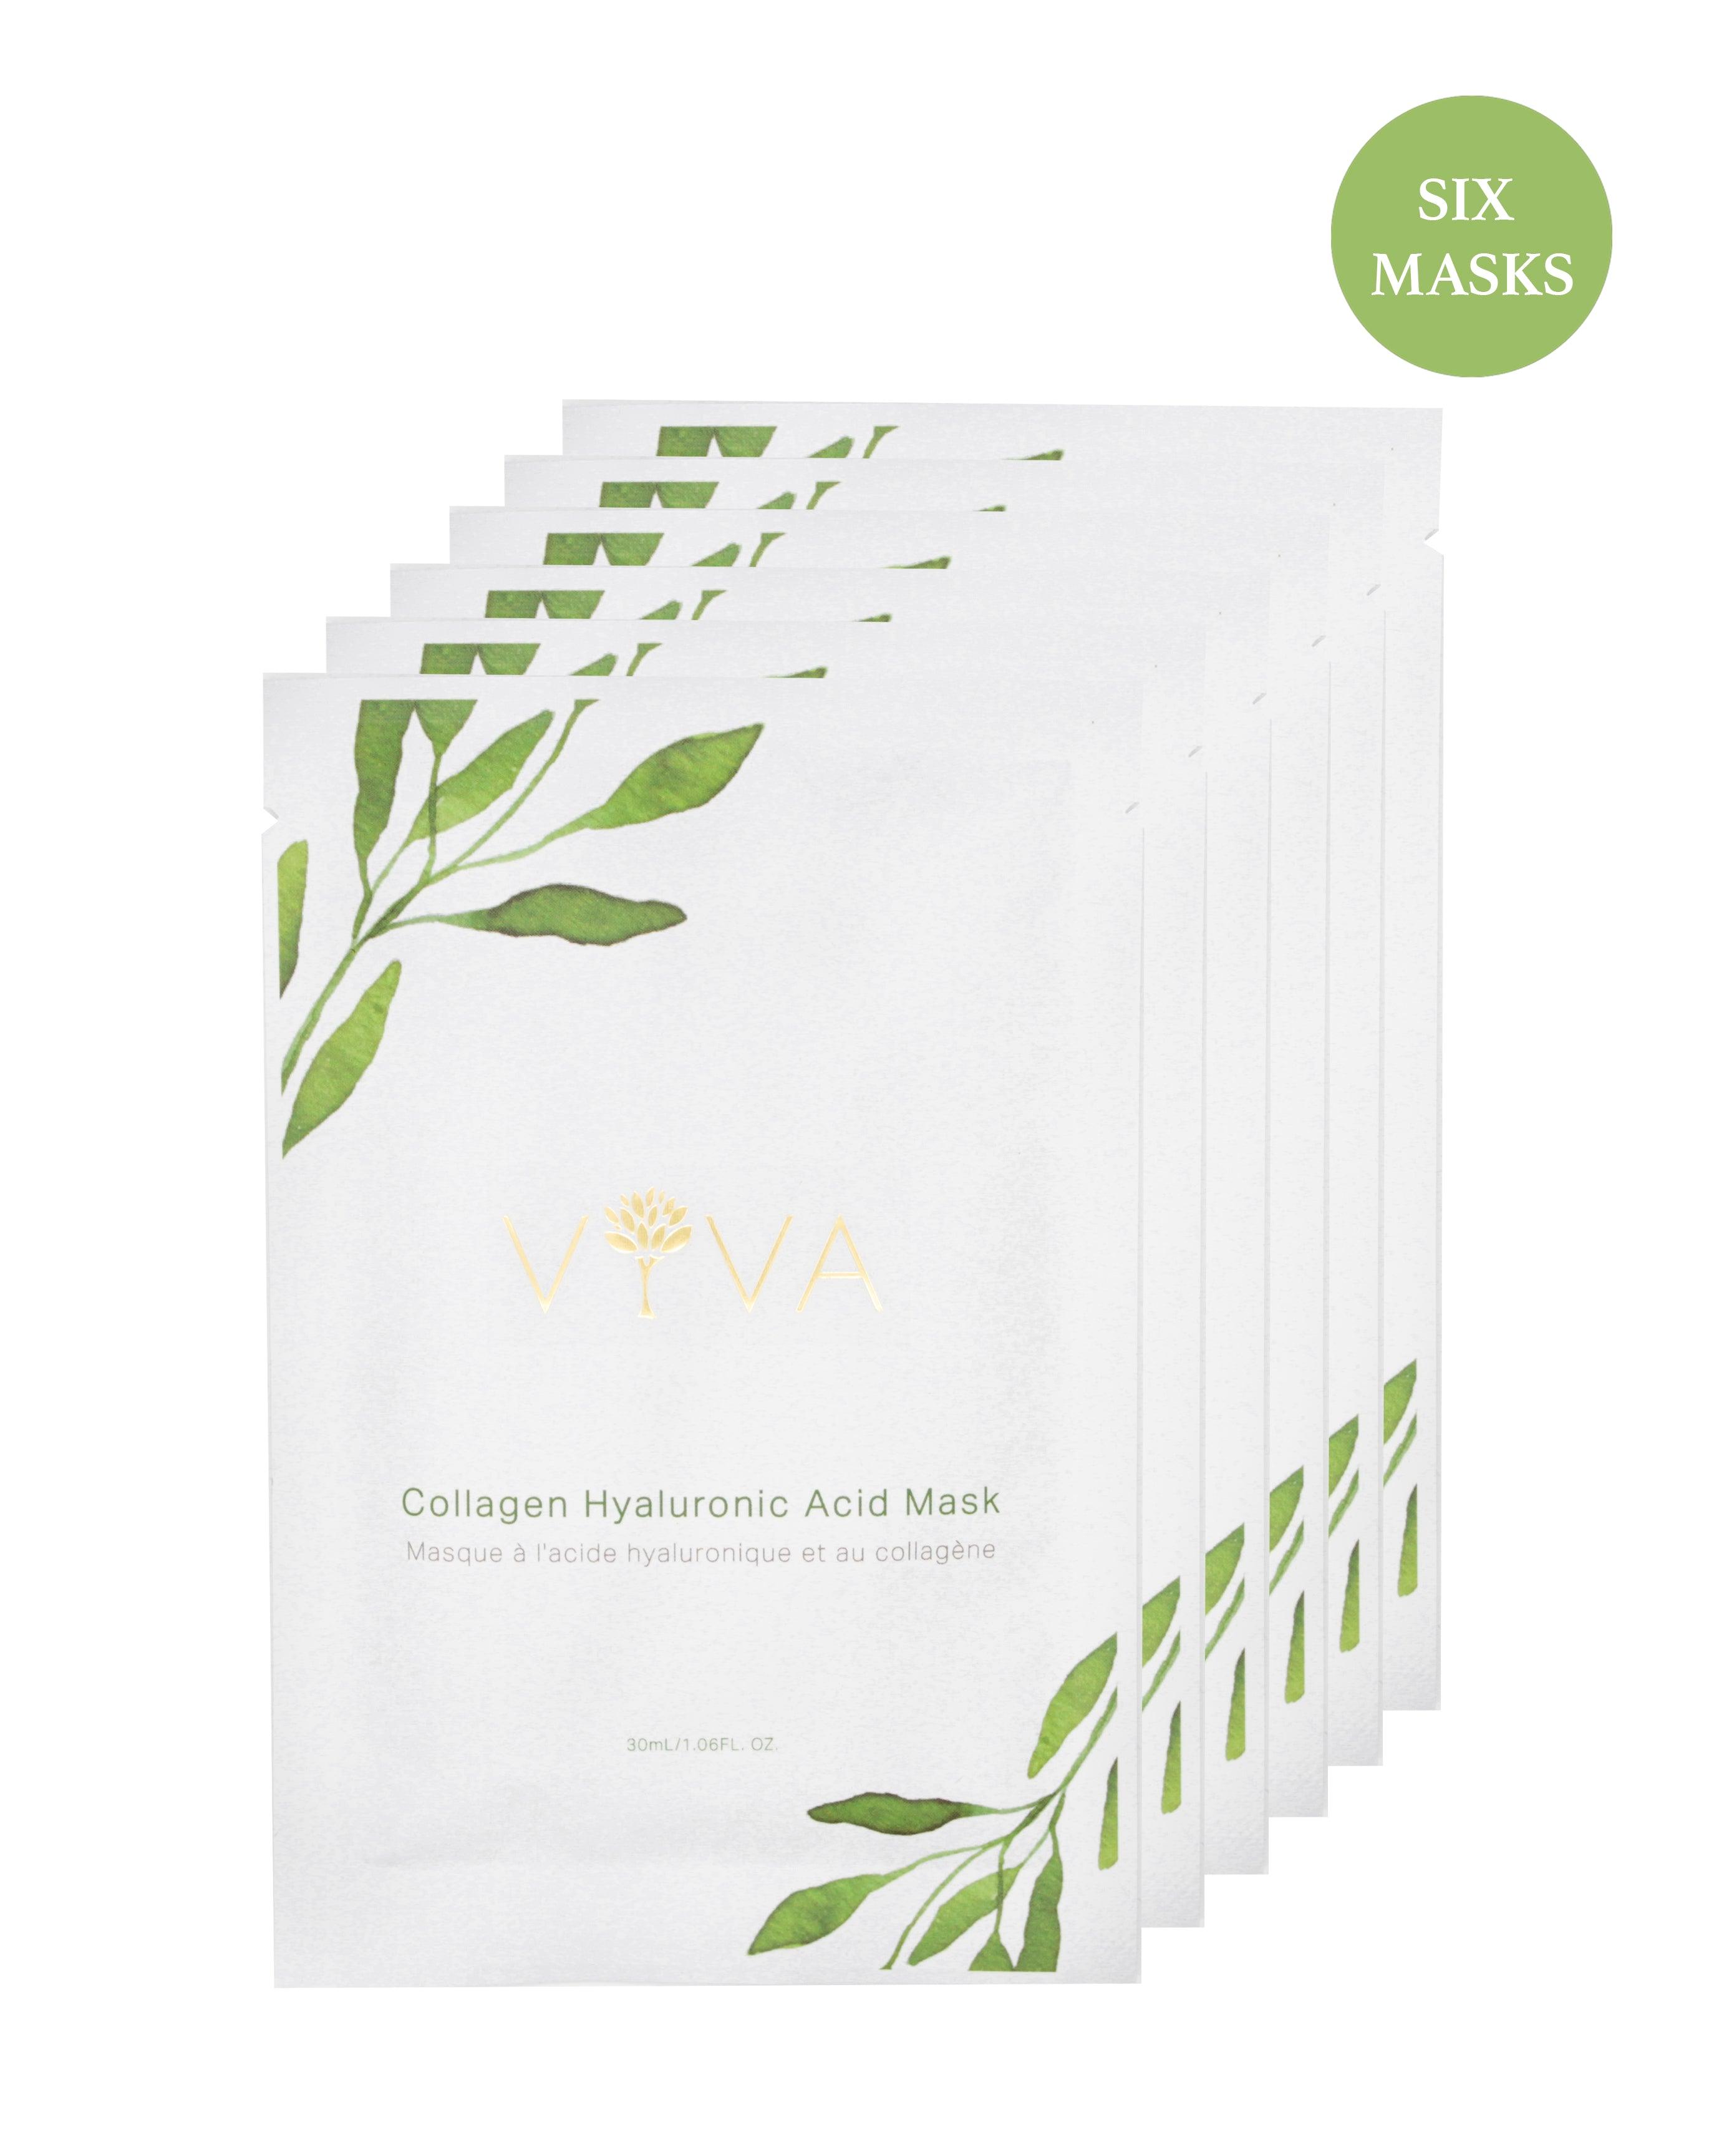 Collagen Hyaluronic Acid Mask Box